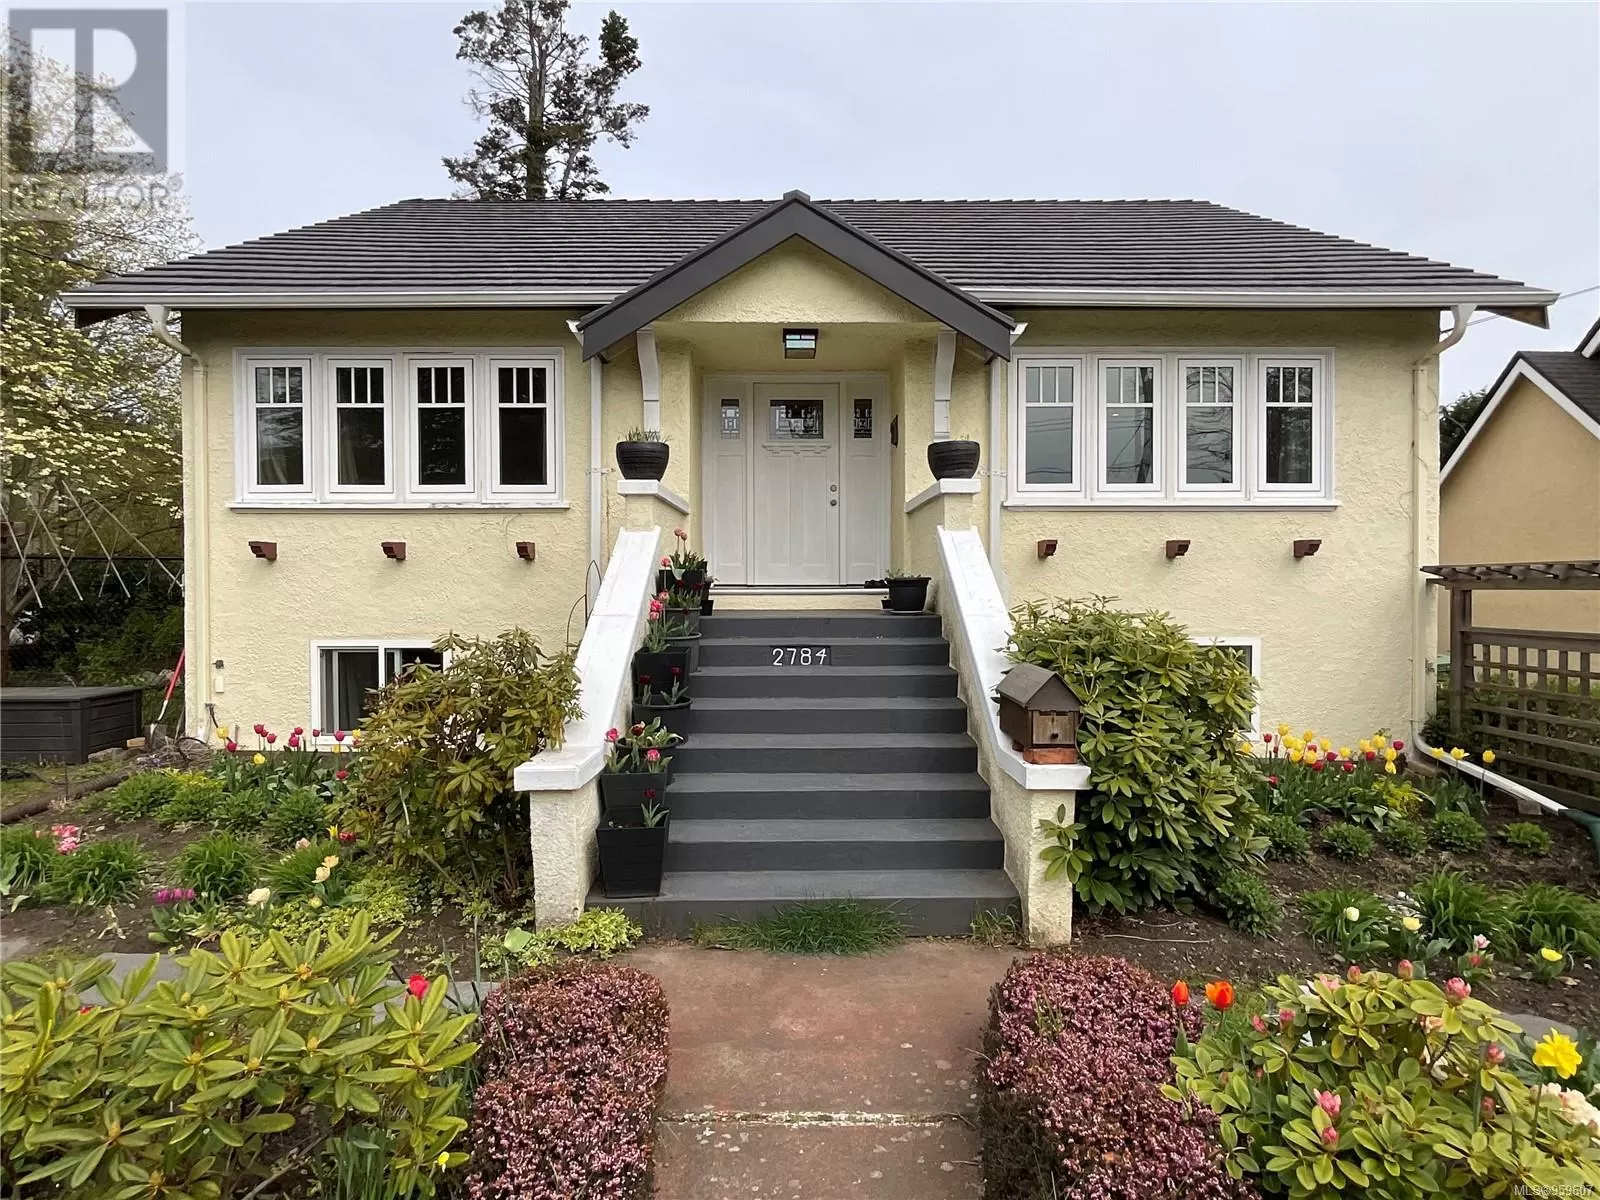 House for rent: 2784 Thompson Ave, Oak Bay, British Columbia V8R 3K8